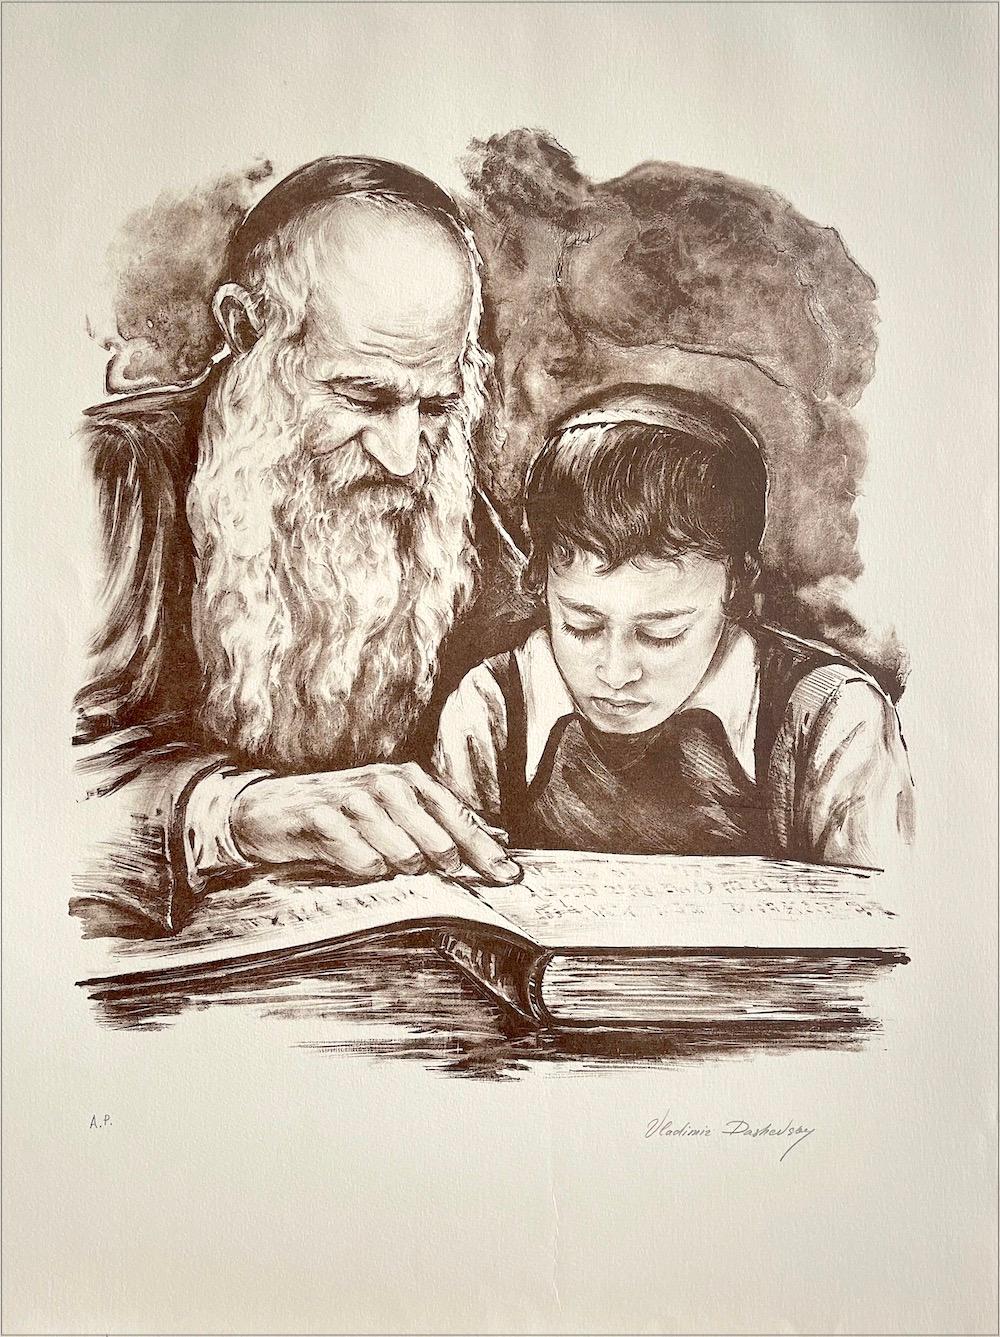 RABBI TEACHING Signed Lithograph, Rabbi and Young Boy, Jewish Art, Judaism